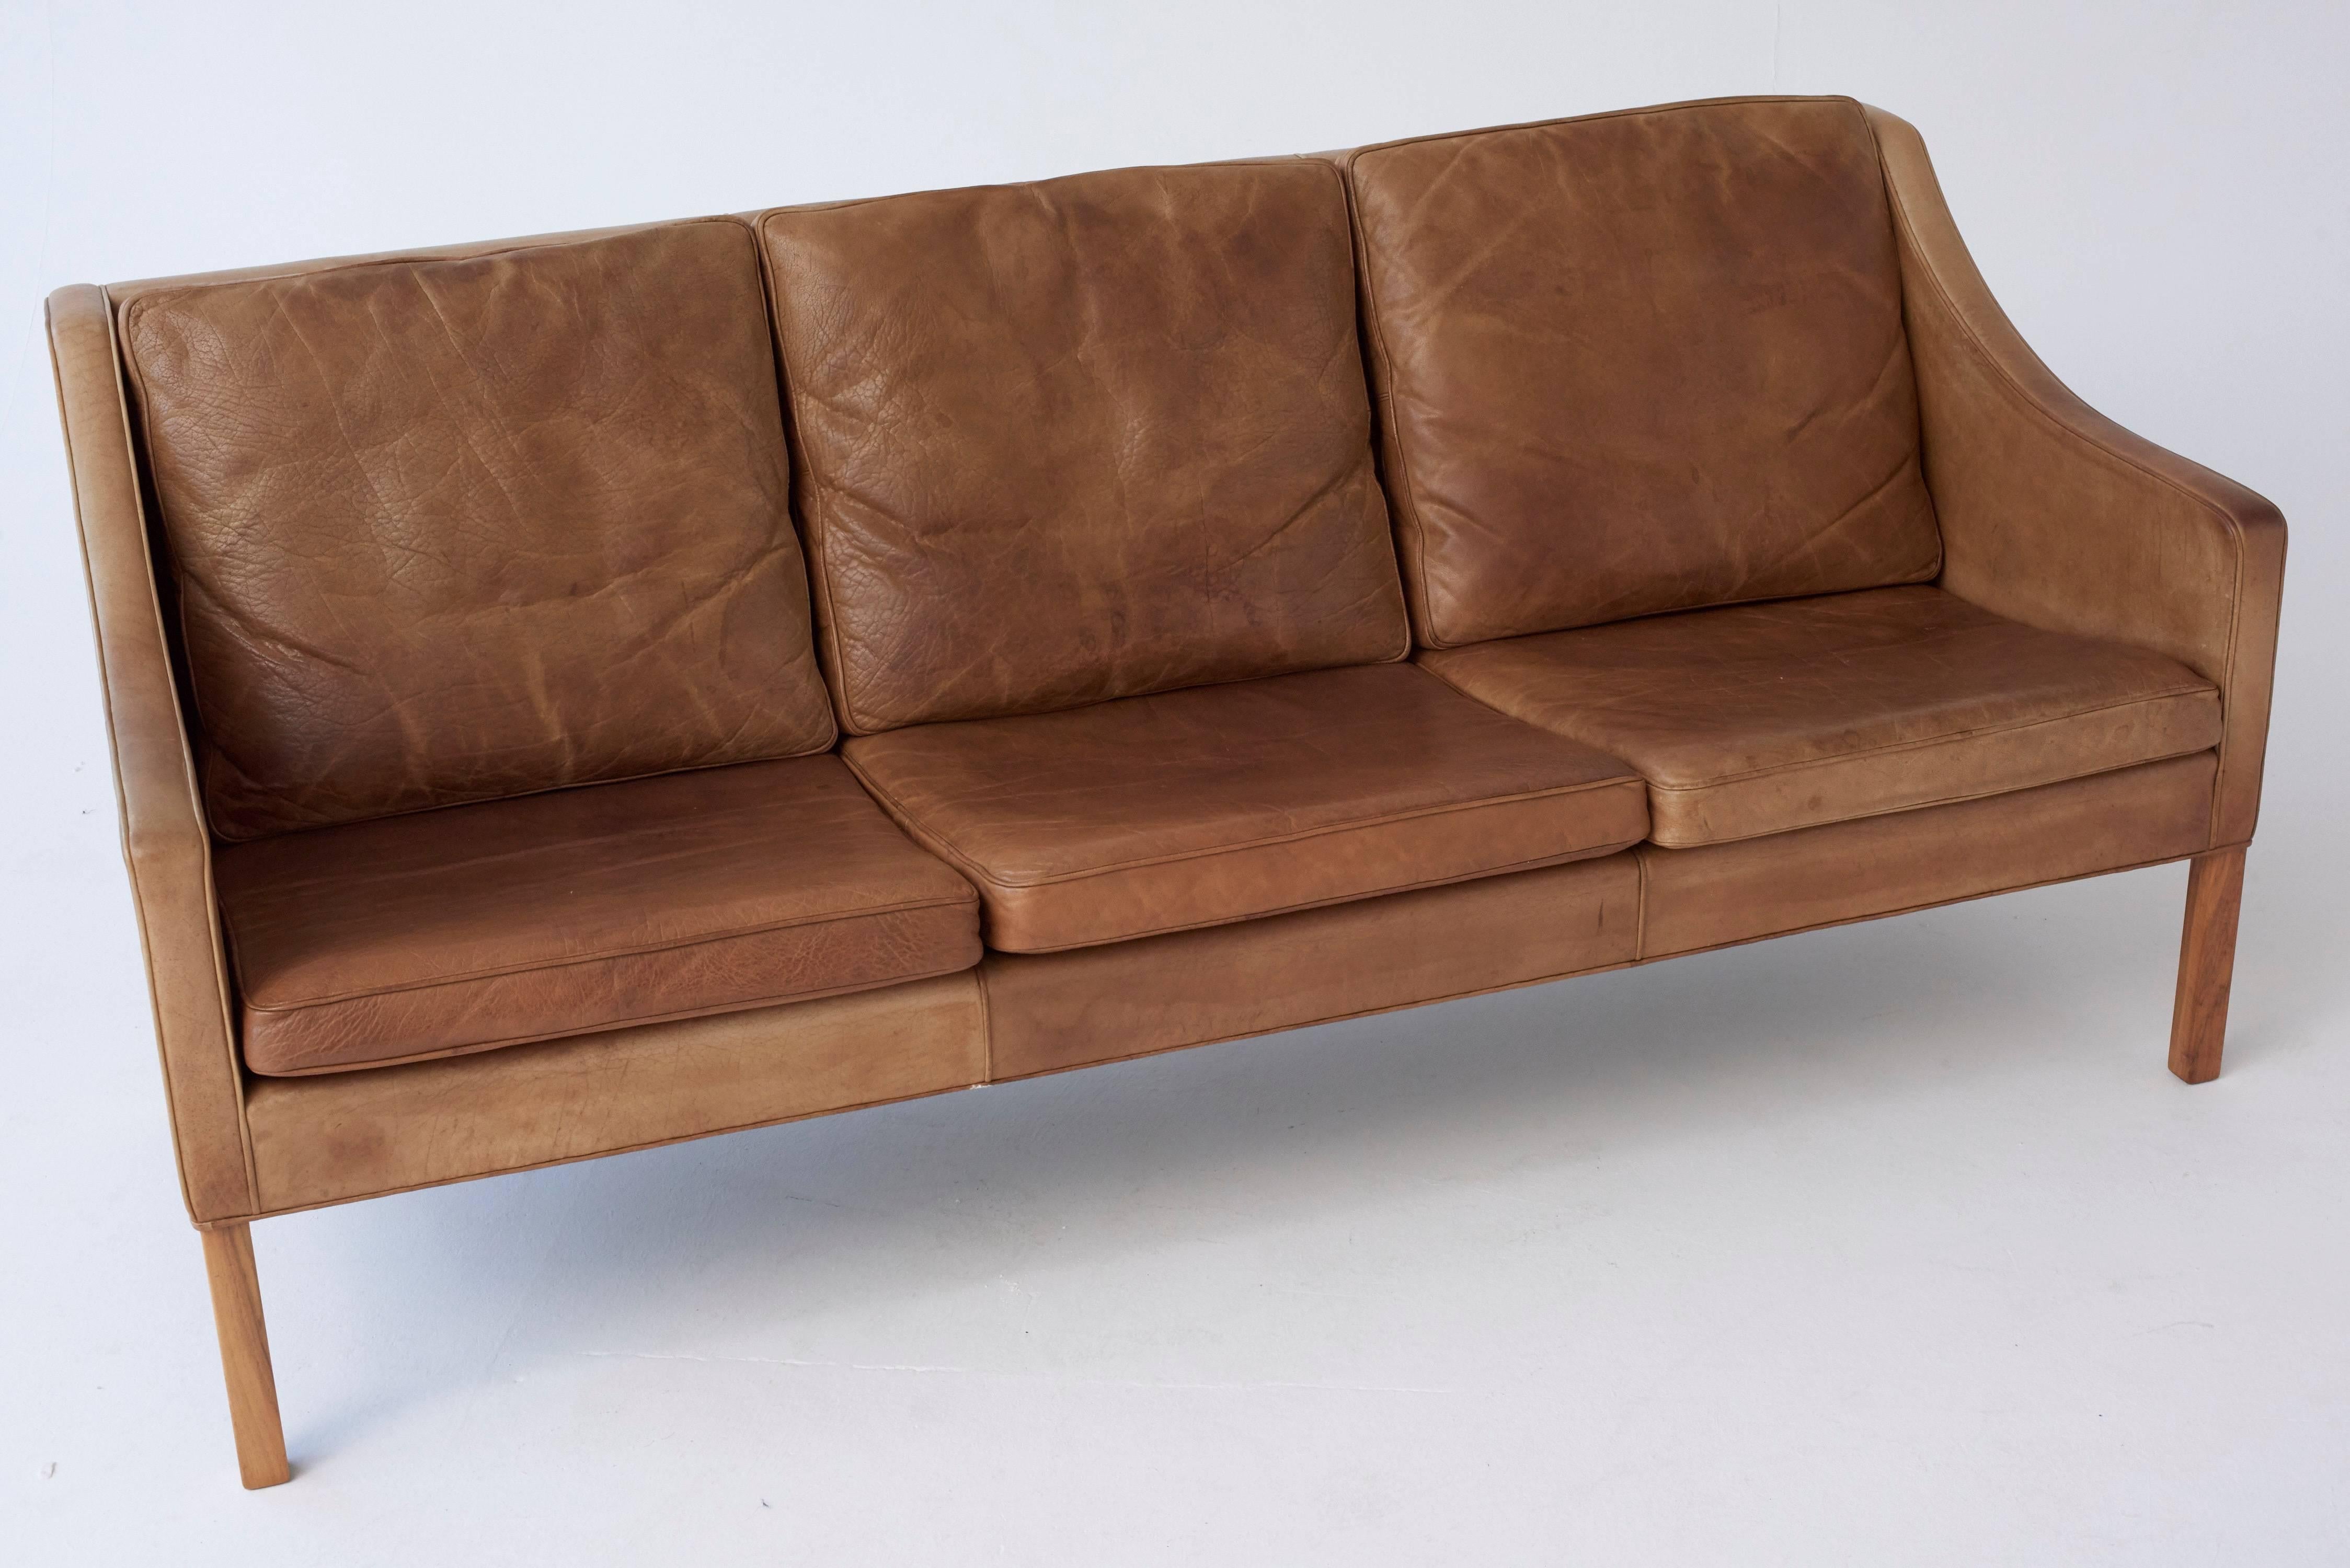 Danish Original Borge Mogensen 2209 Sofa in Patinated Tan Leather, Denmark, 1960s-1970s